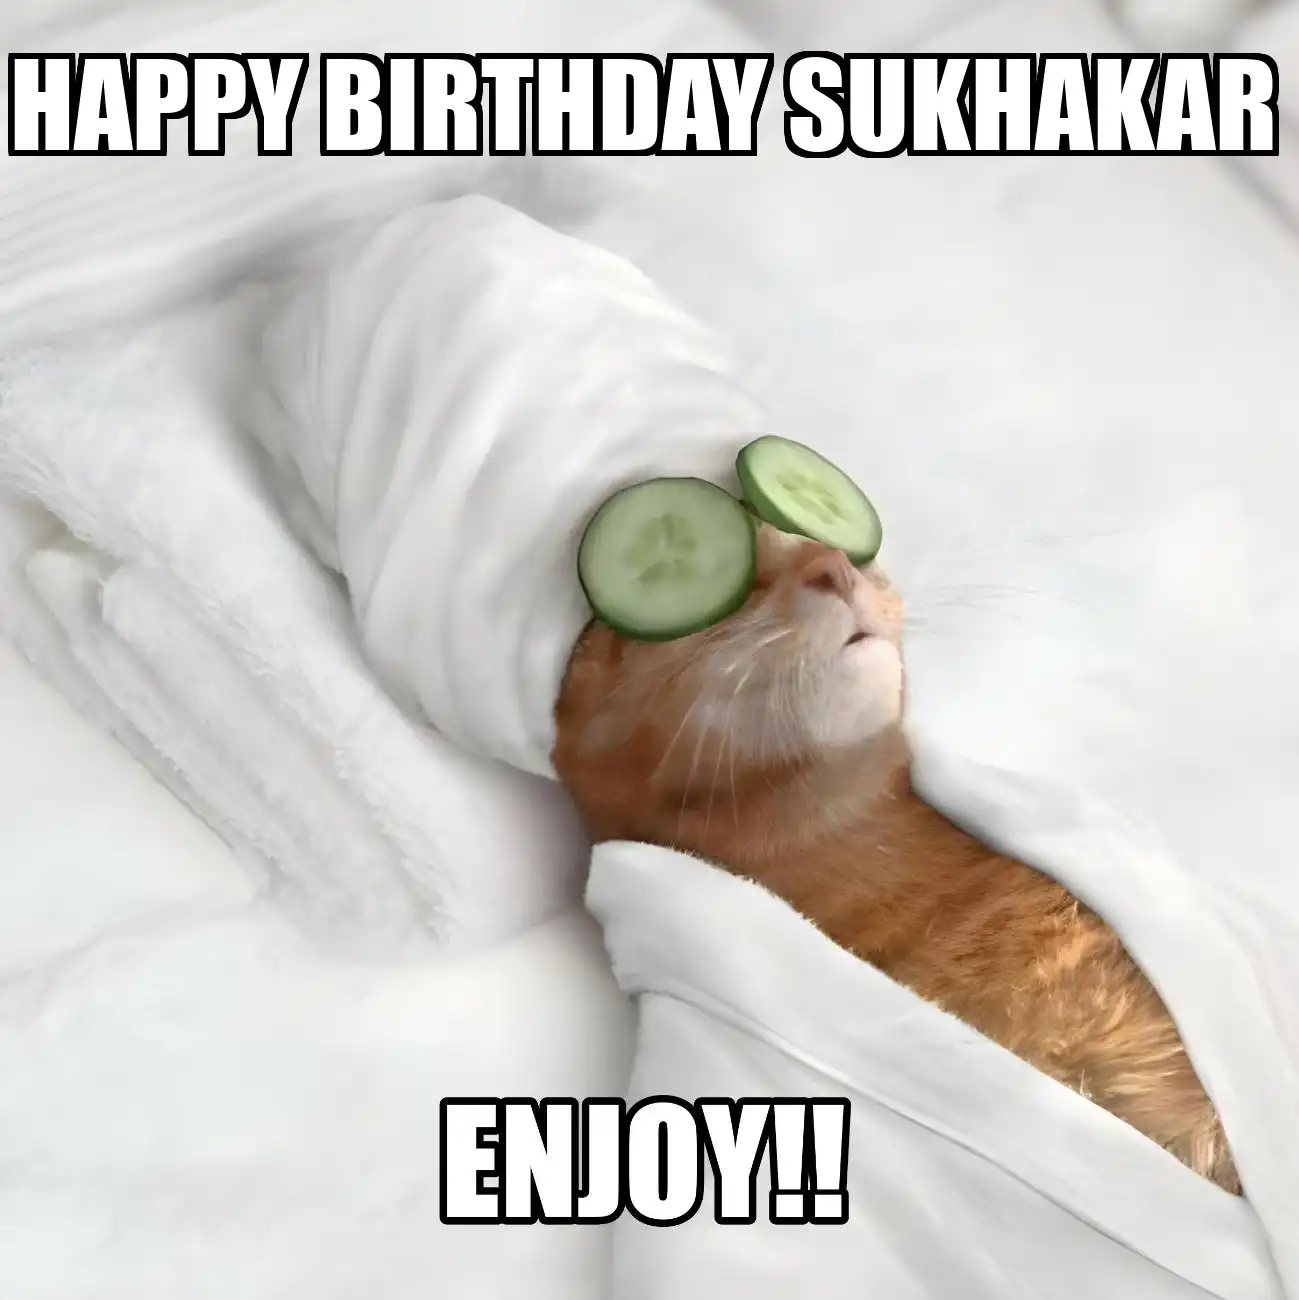 Happy Birthday Sukhakar Enjoy Cat Meme